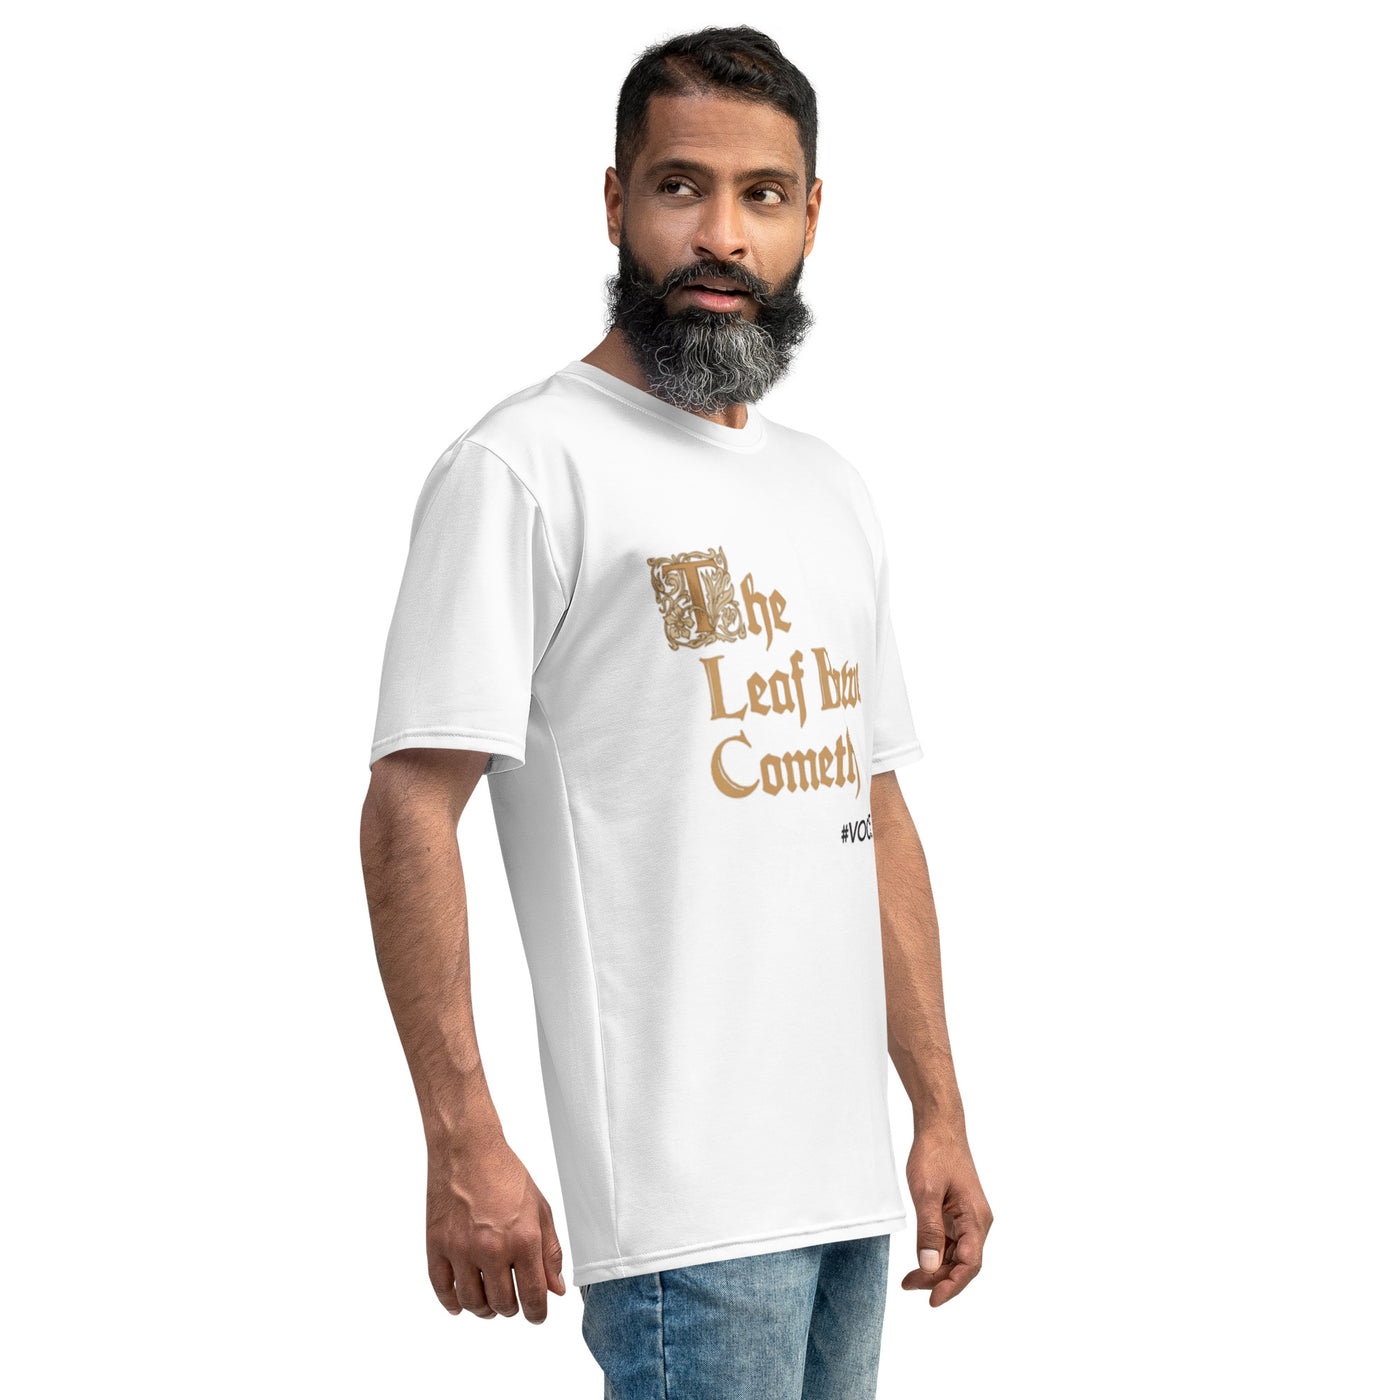 THE LEAF BLOWER COMETH! Men's t-shirt